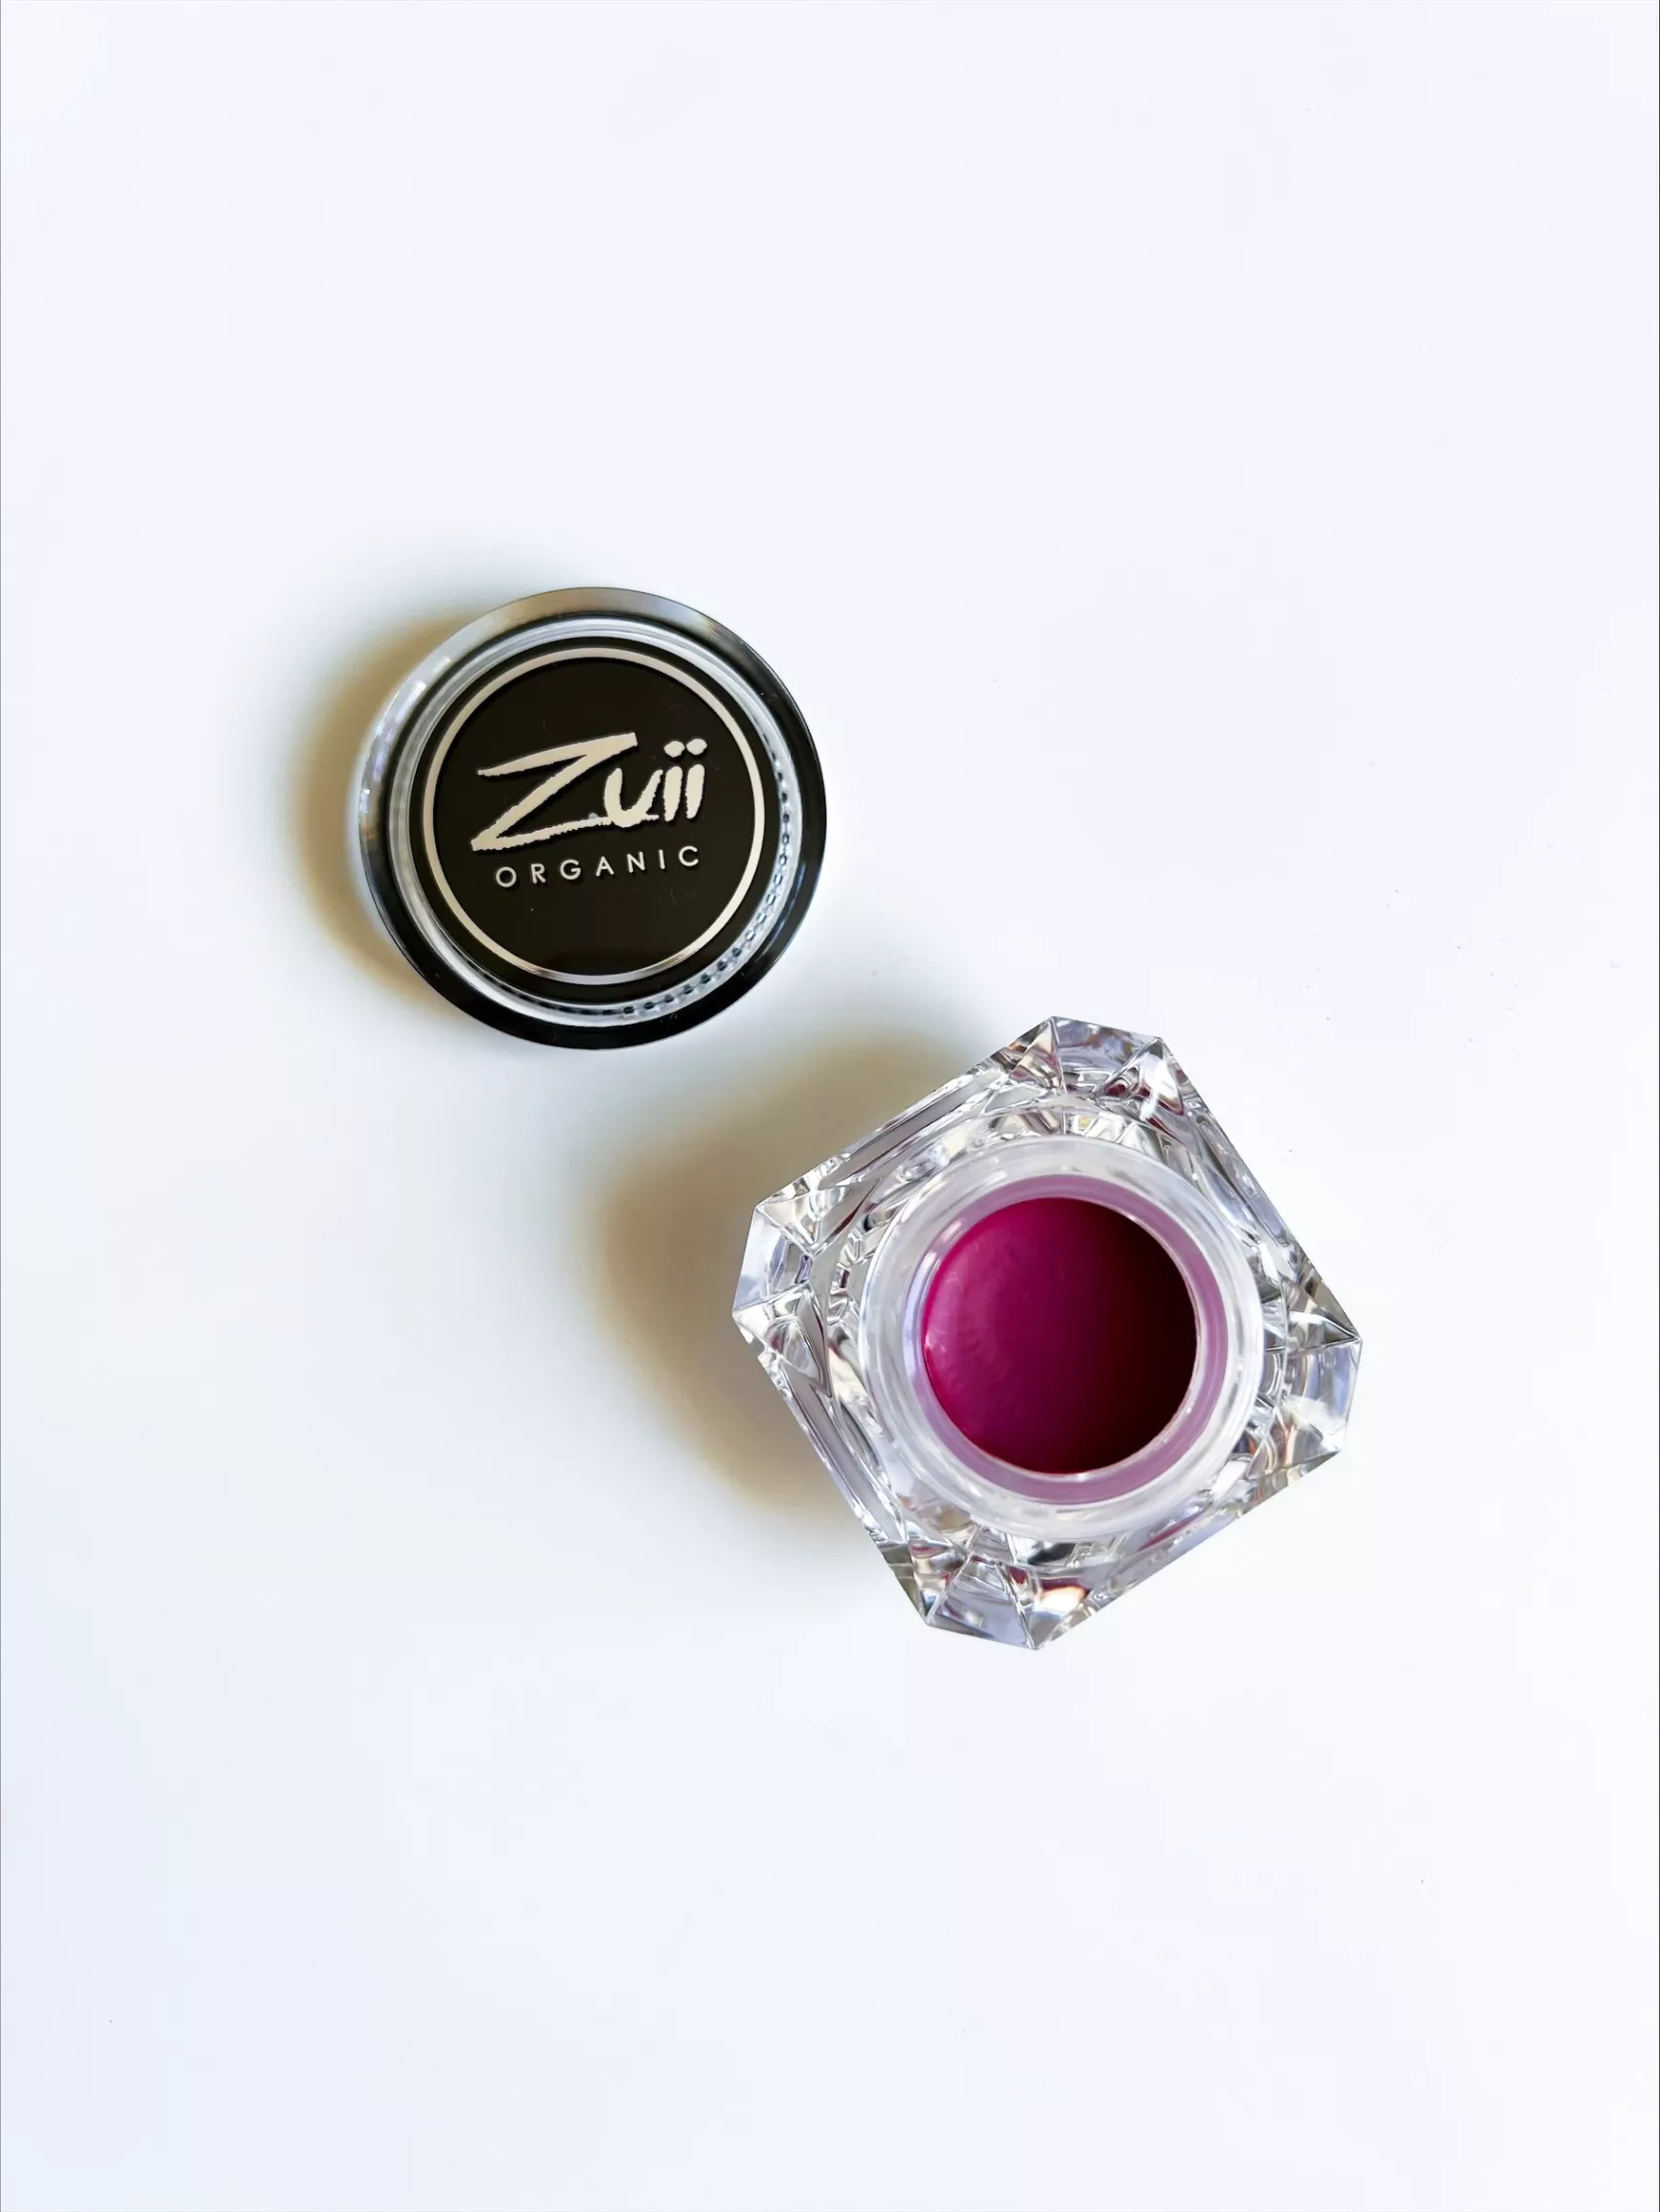 Poskipuna 4: Zuii Organic Flora Lip and Cheek Crème